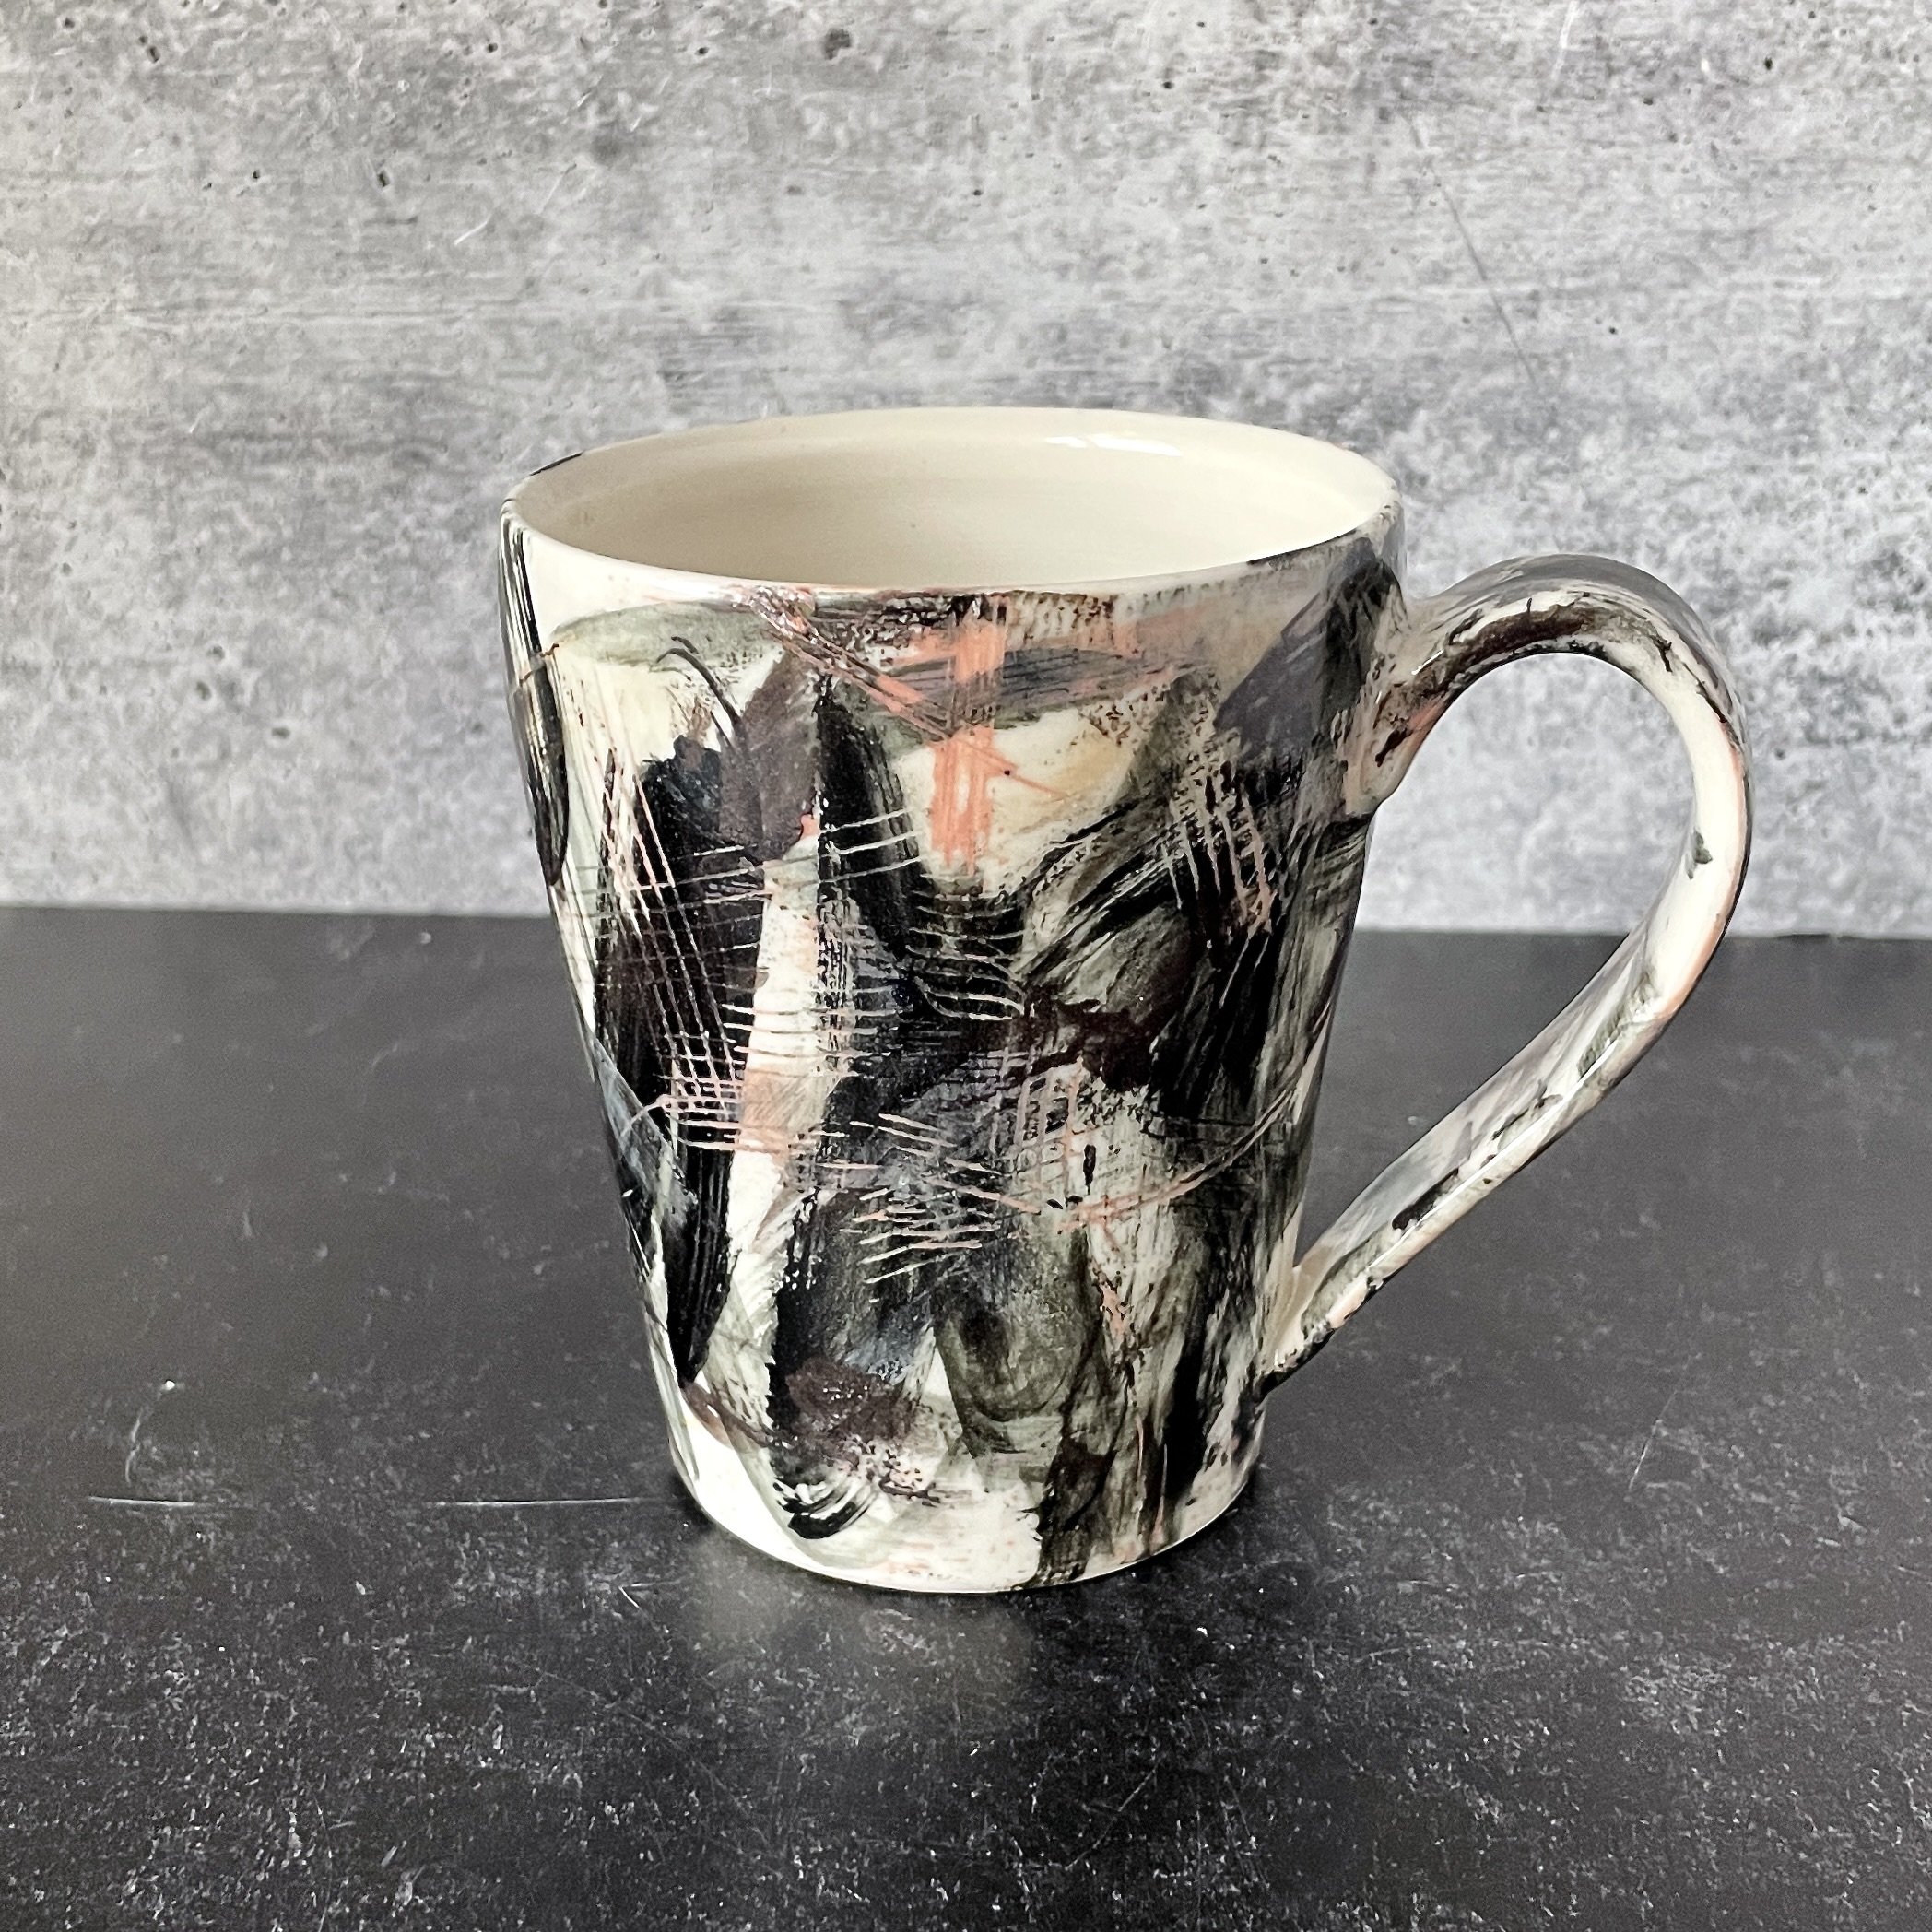 Handmade Porcelain Mug with Modern Abstract Design